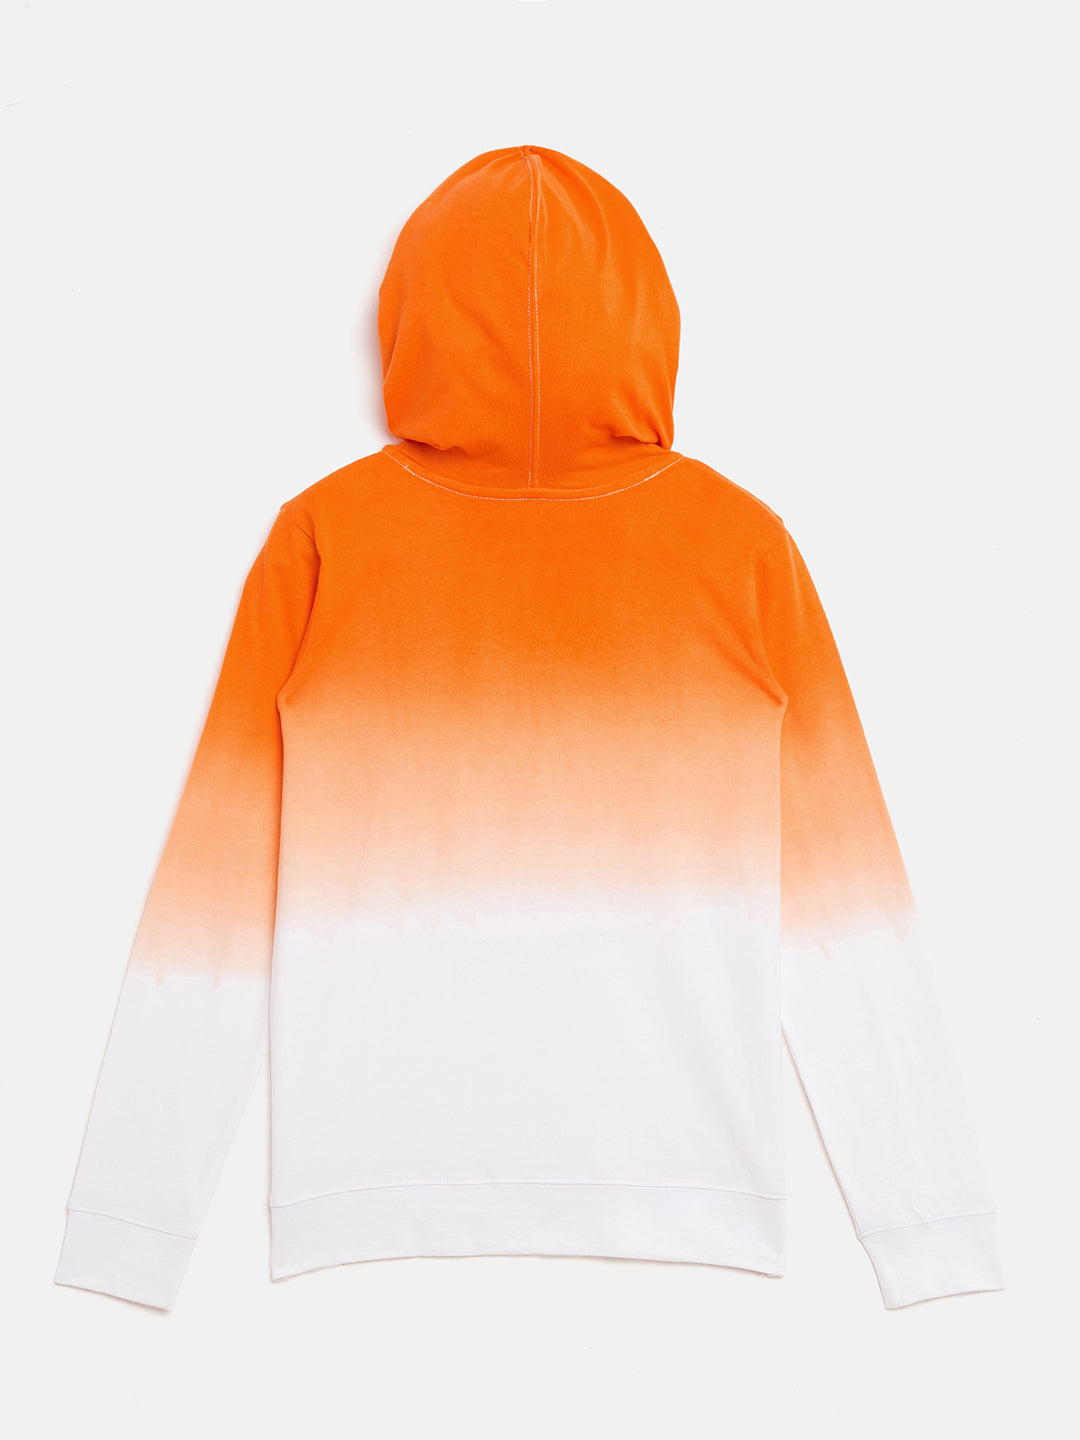 White/Orange Kids Full Sleeves Ombre Dyeing Hooded T-Shirt